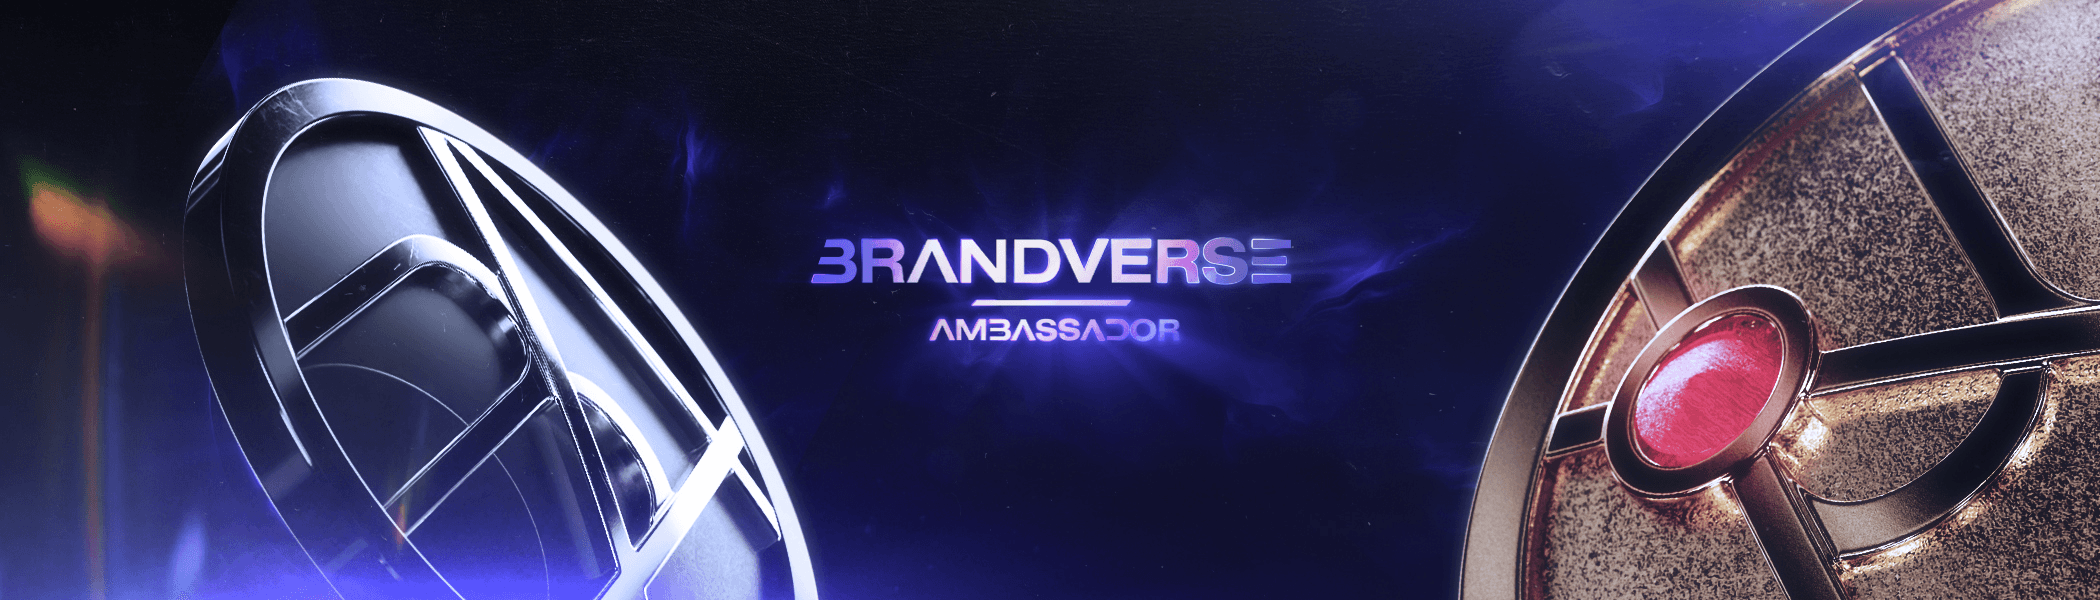 Brandverse Ambassador